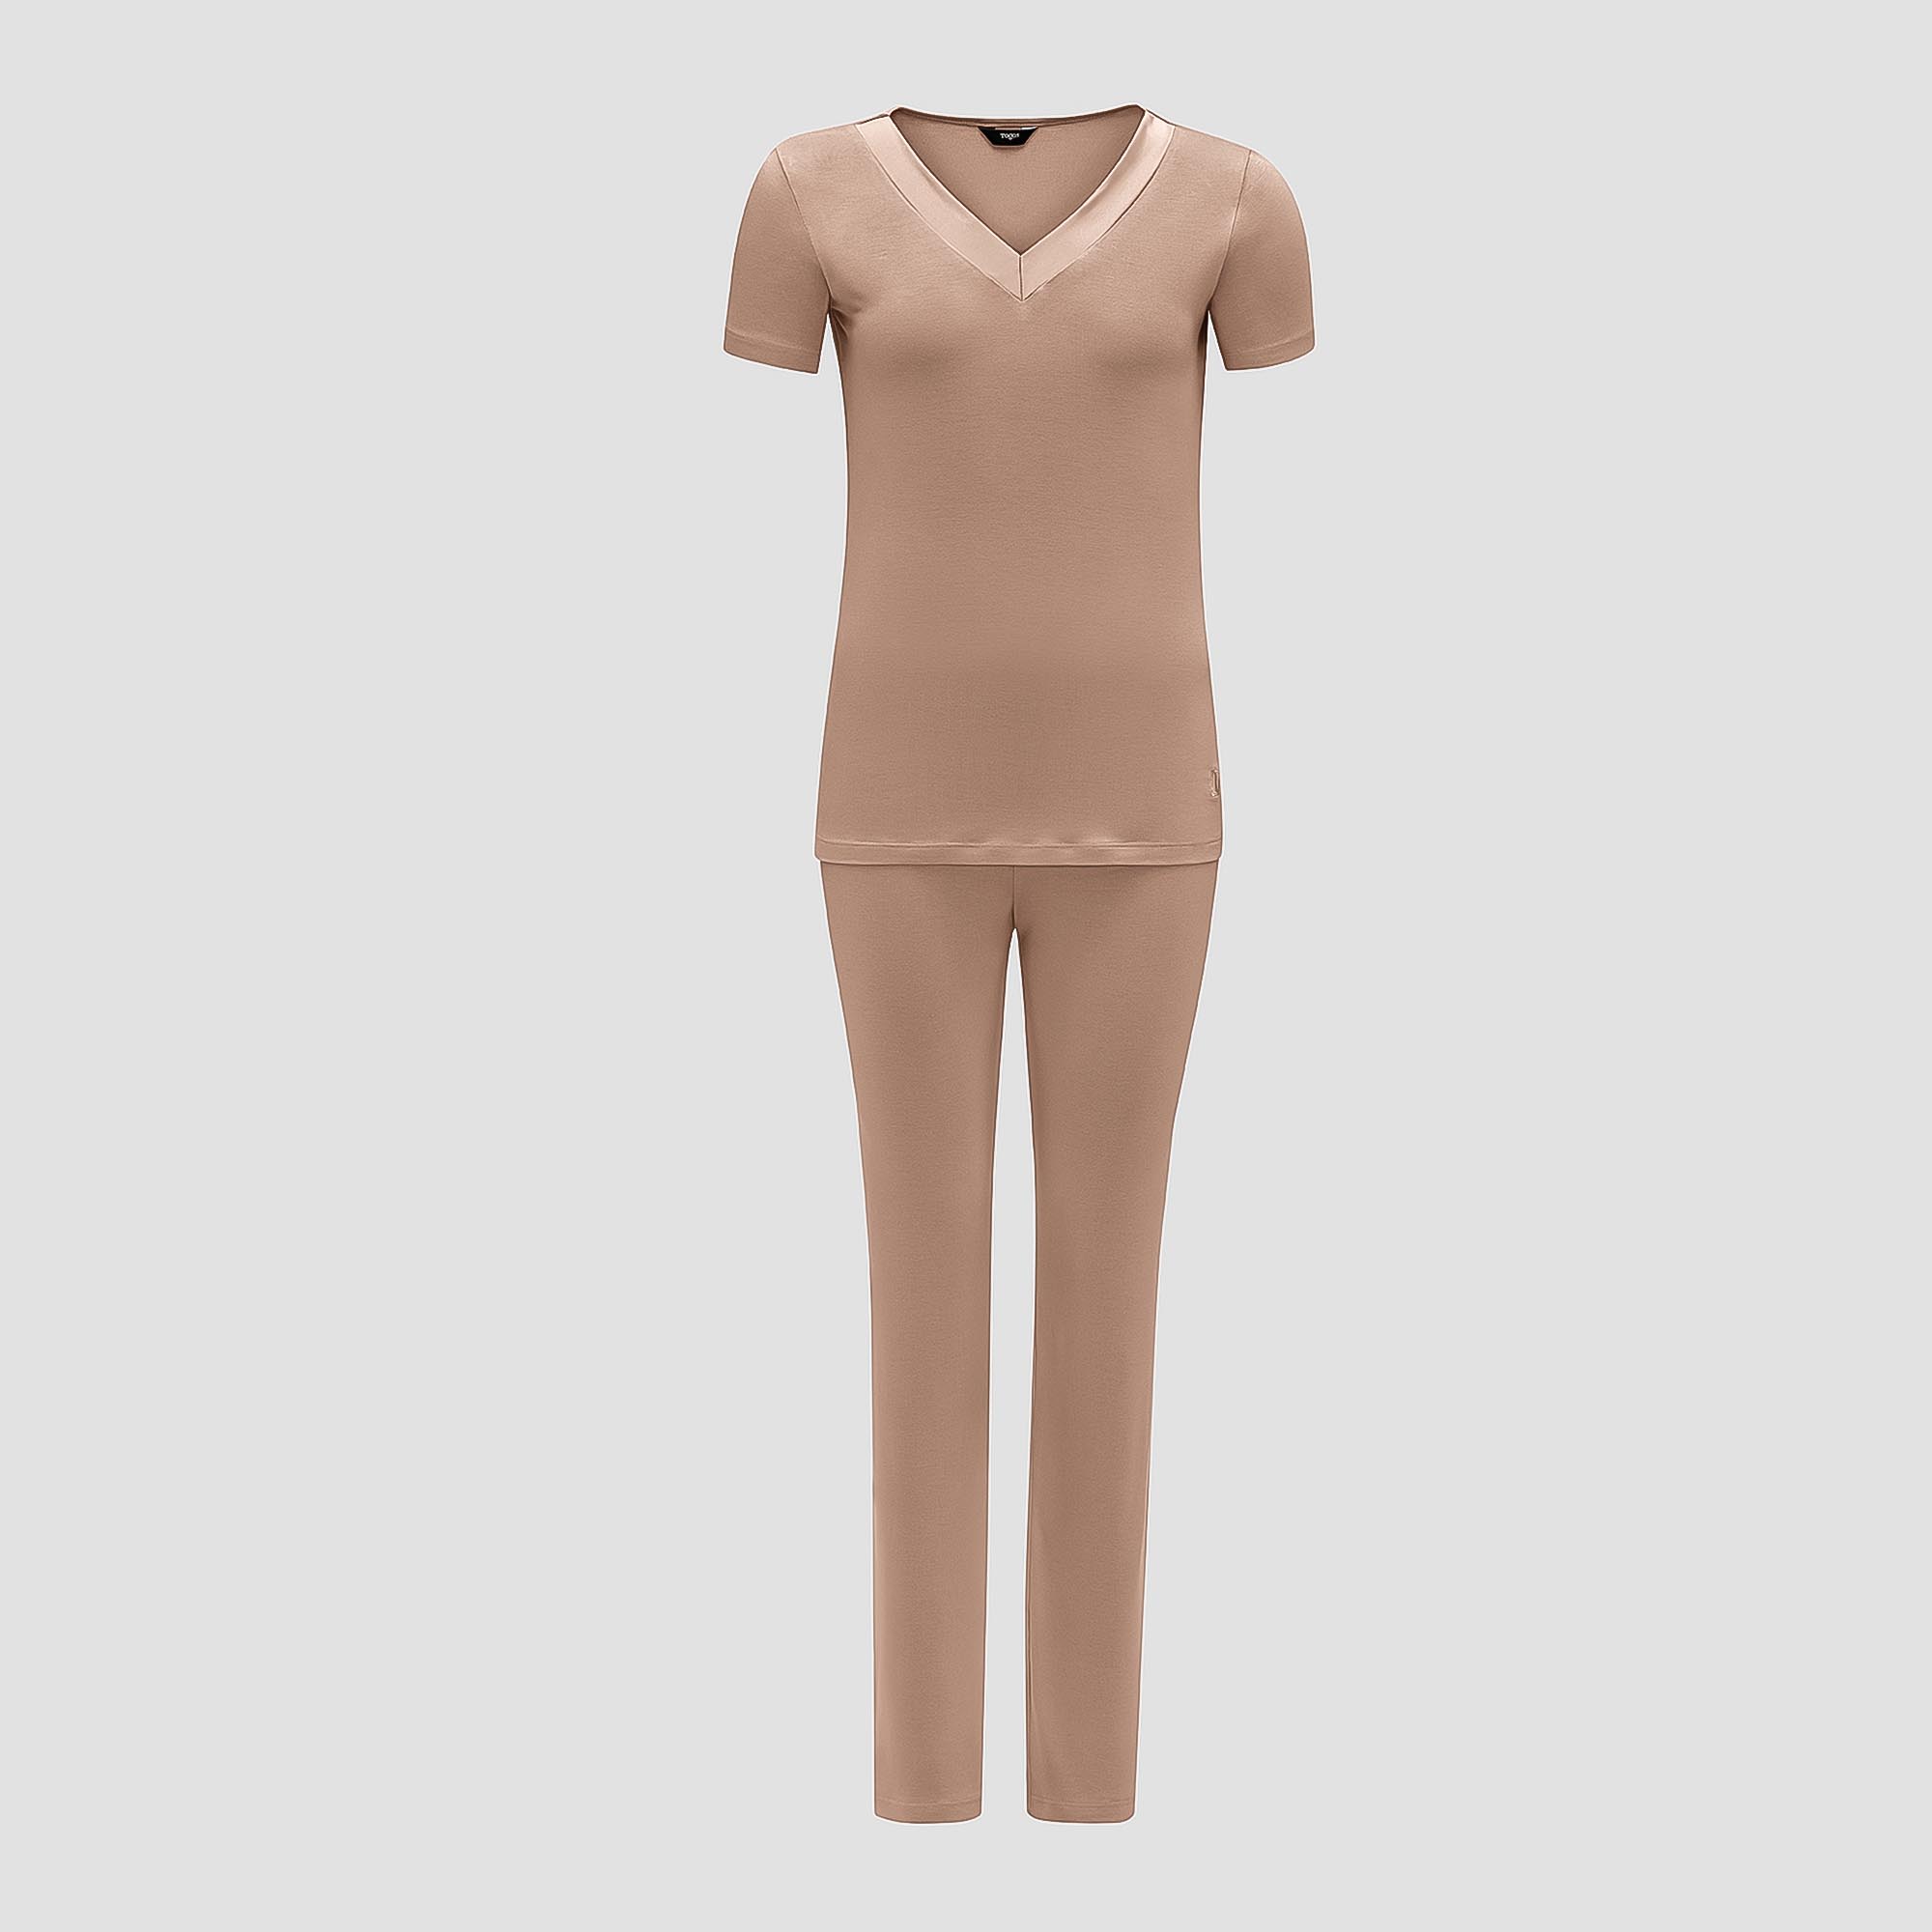 Пижама Togas Ингелла розово-бежевая женская S(44) 2 предмета